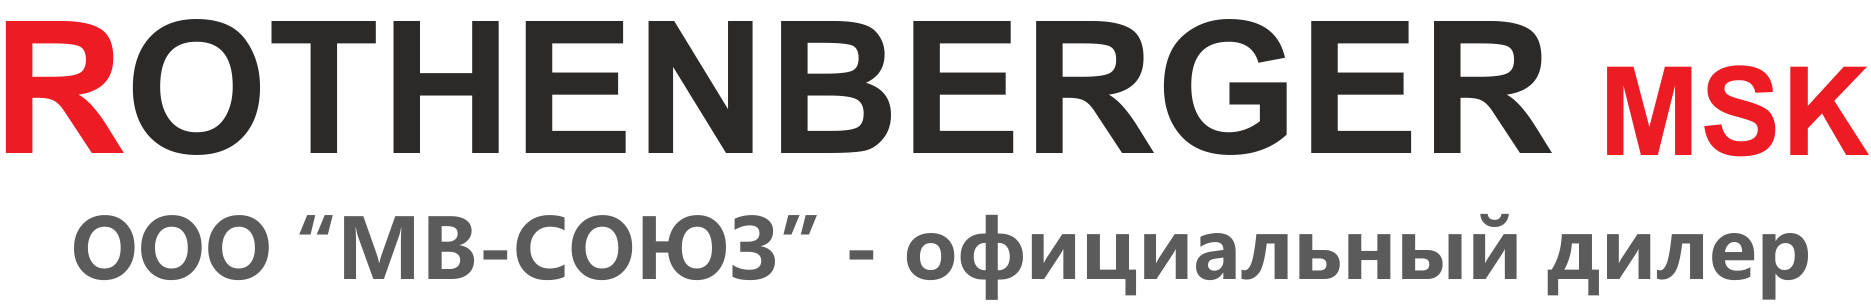 Интернет магазин rothenberger-msk.ru